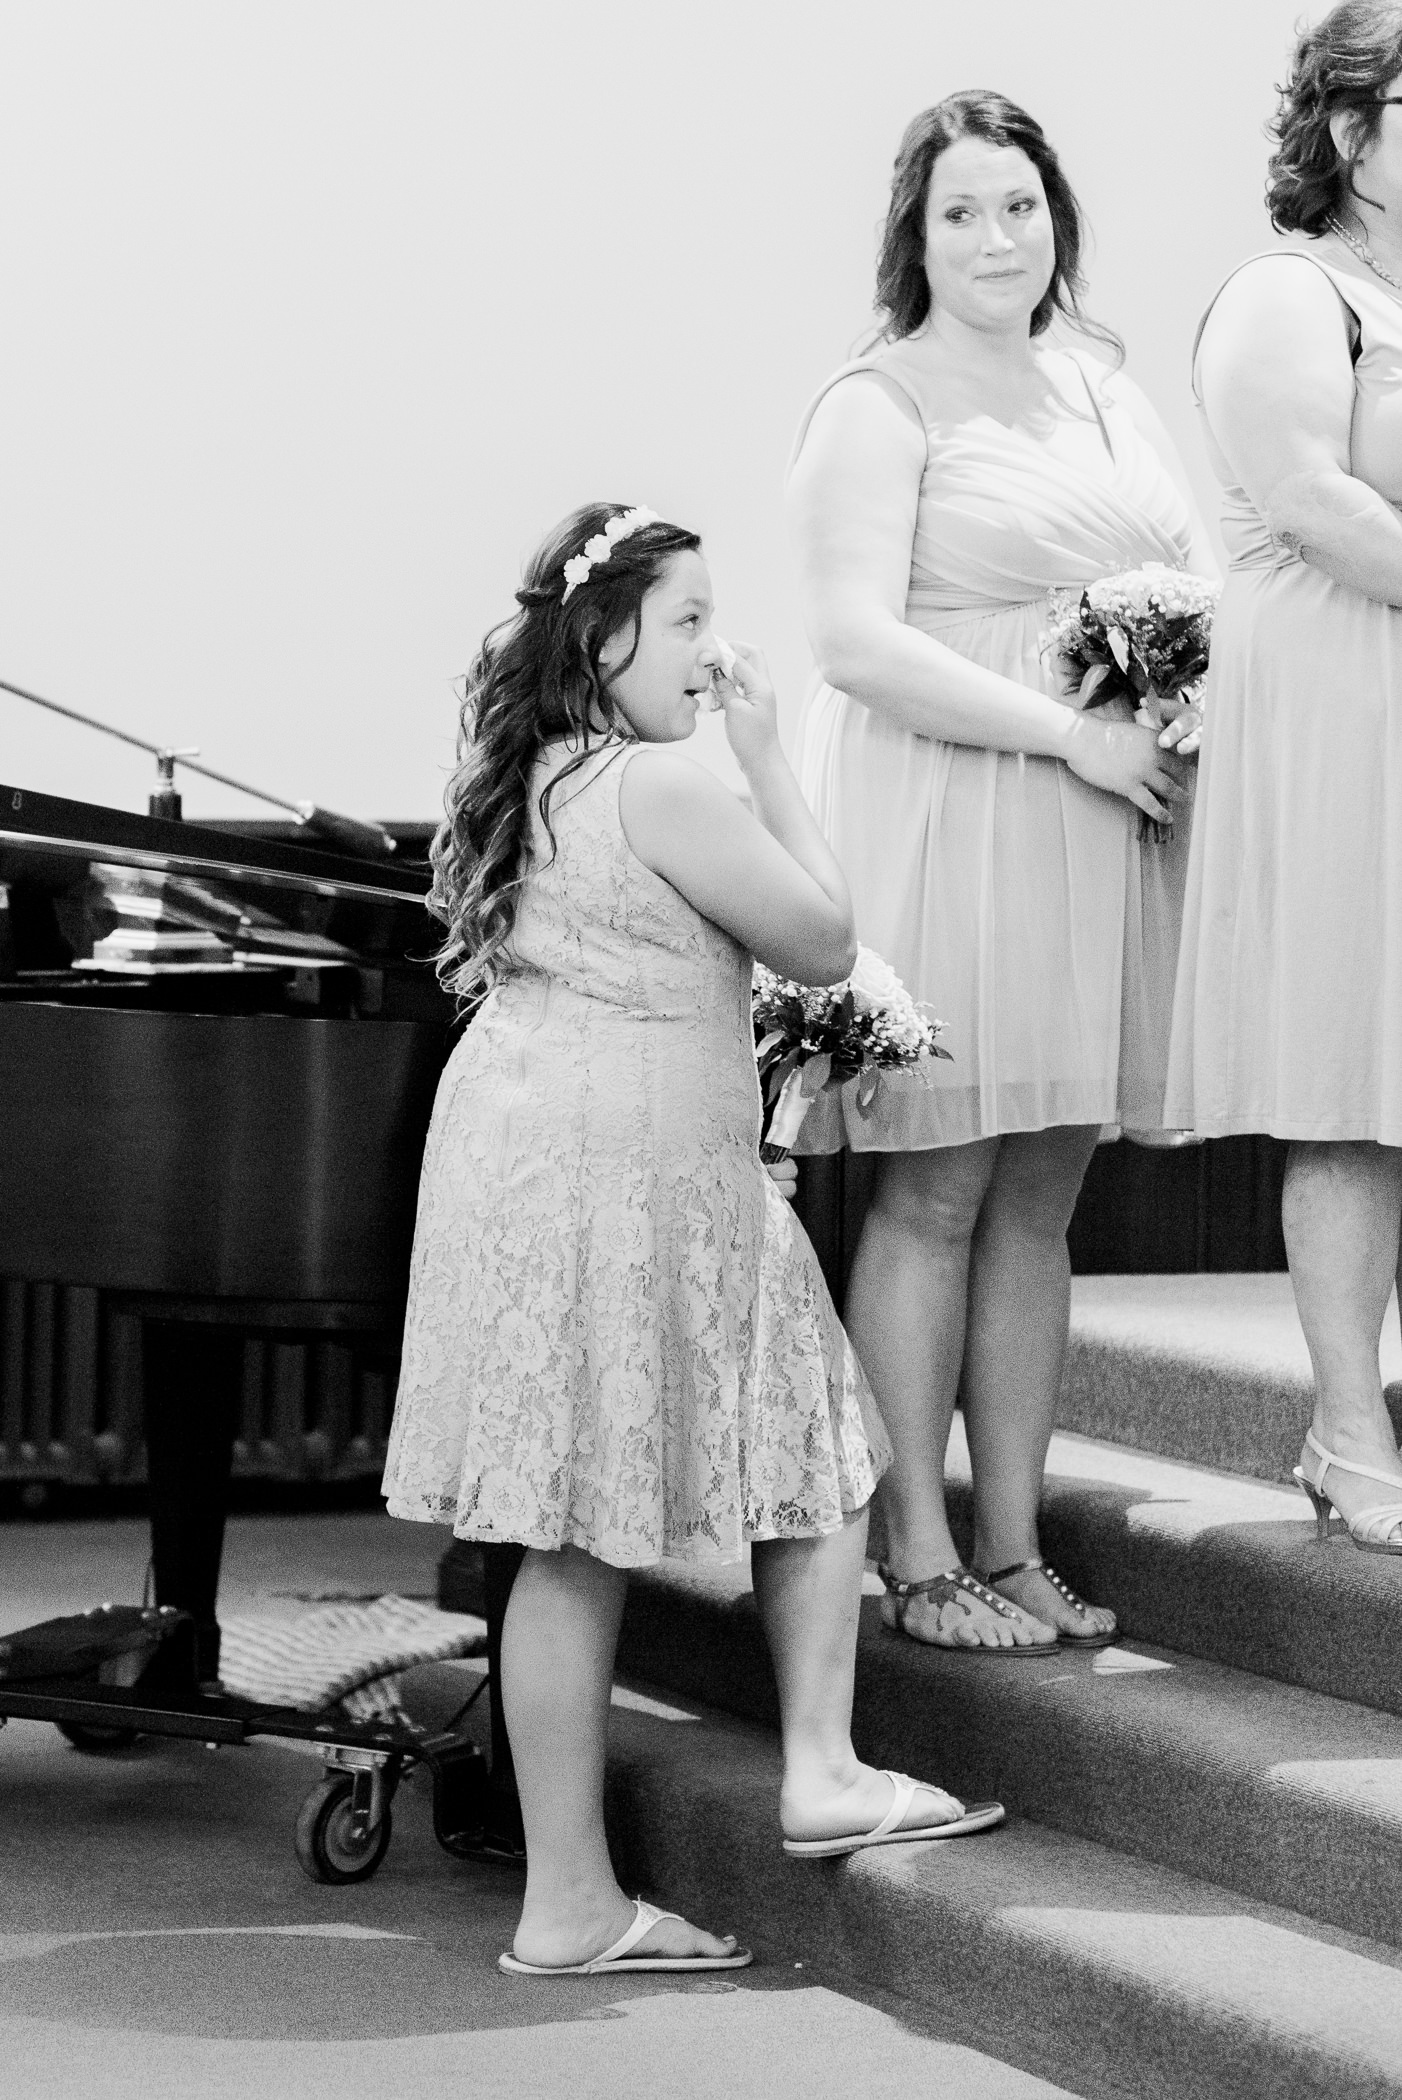 Platteville First Congregational Church wedding photographers - Larissa Marie Photography